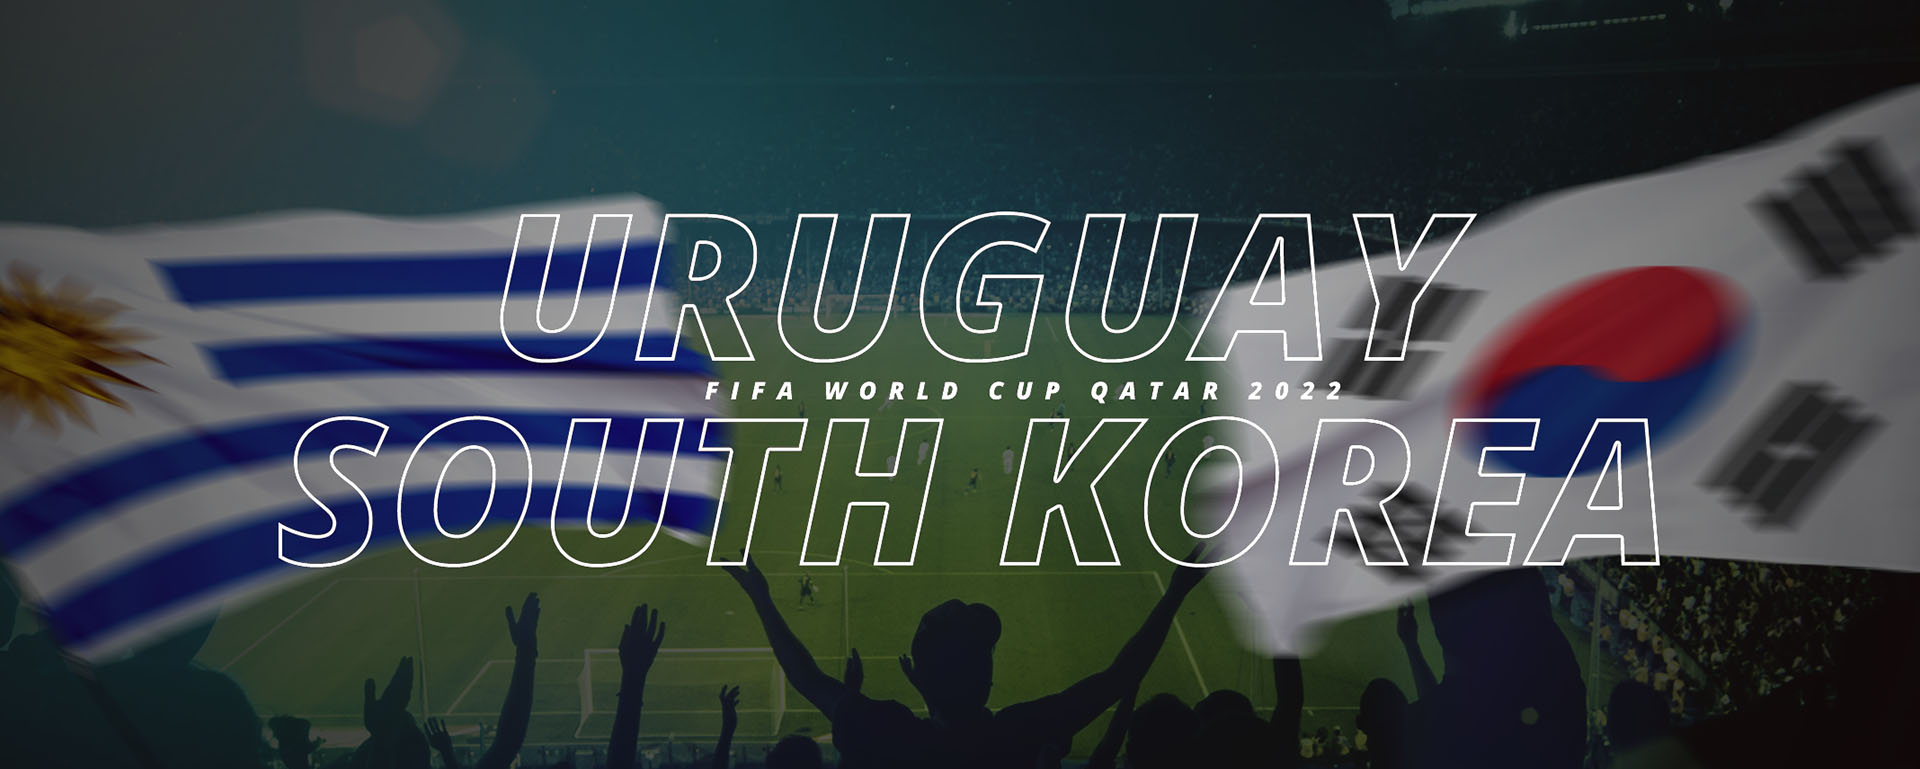 URUGUAY VS SOUTH KOREA | FIFA WORLD CUP QATAR 2022